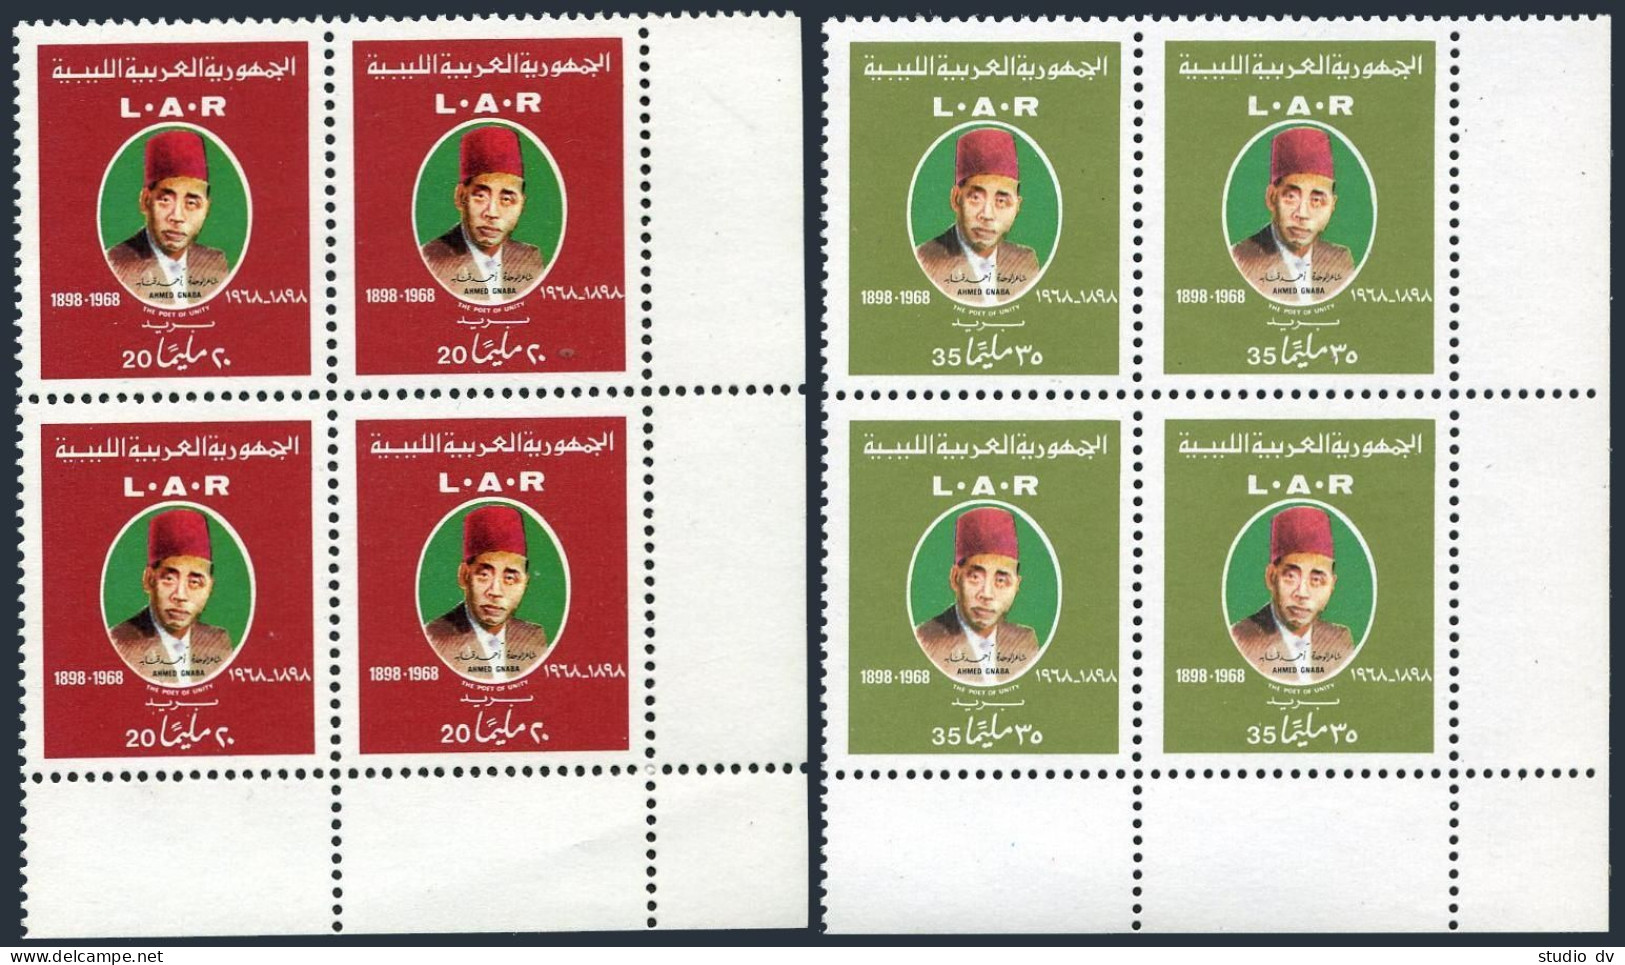 Libya 439-440 Blocks/4,MNH.Mi 357-358. Ahmed Gnaba,1898-1968,poet Of Unity.1972. - Libye